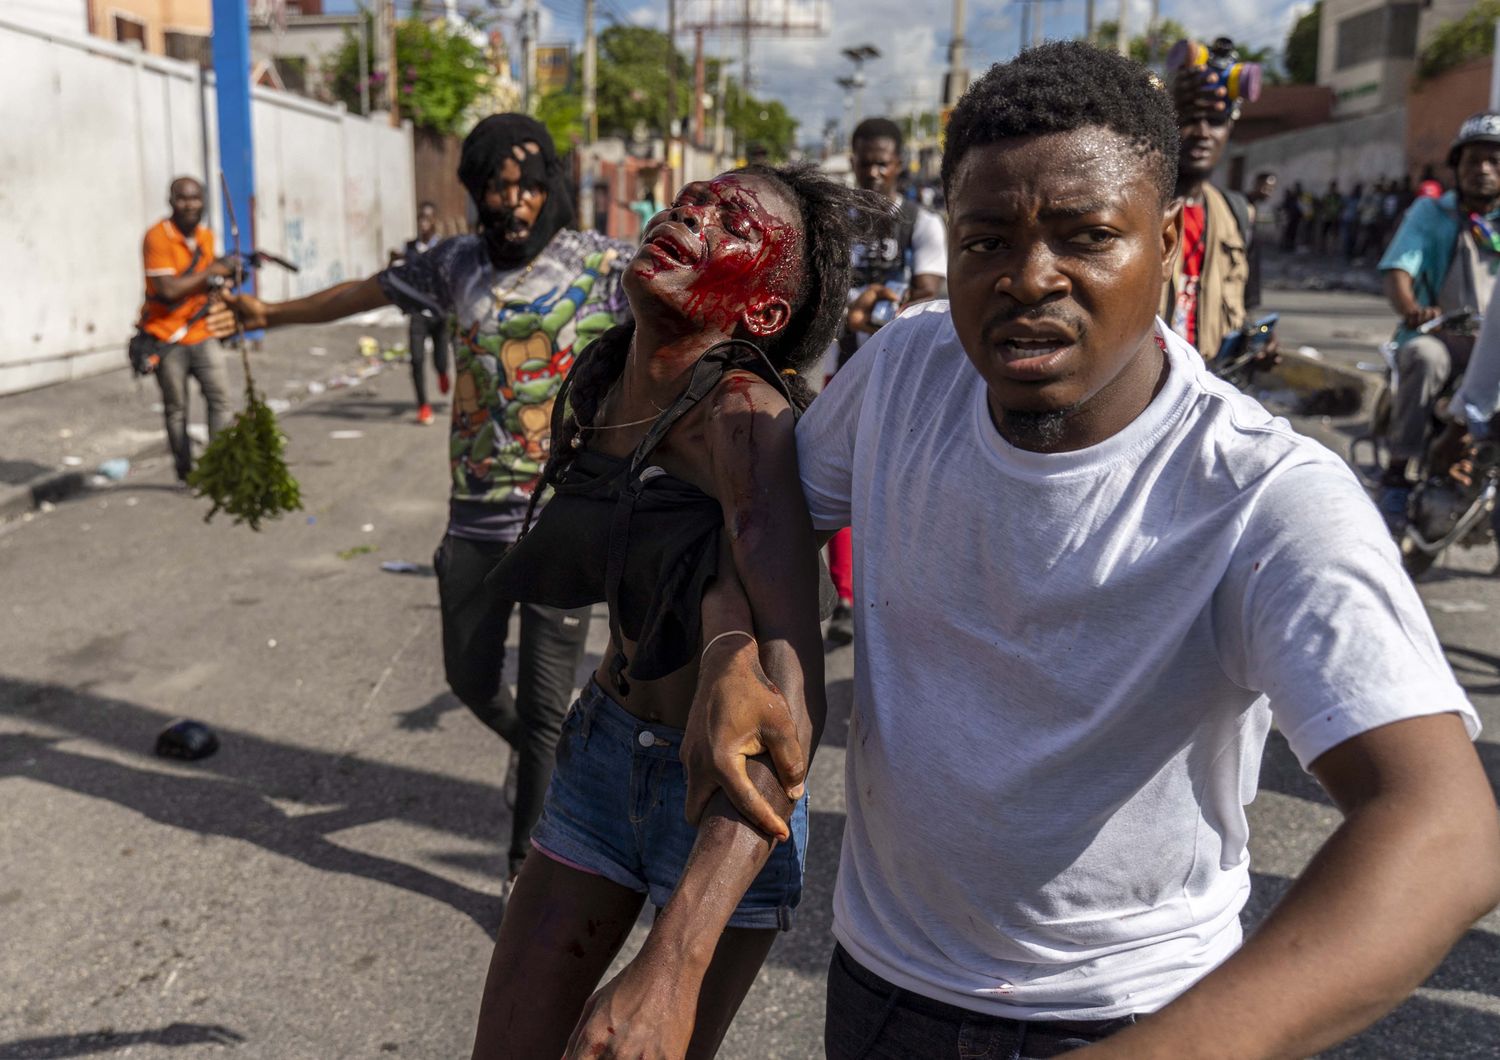 Il caos ad Haiti